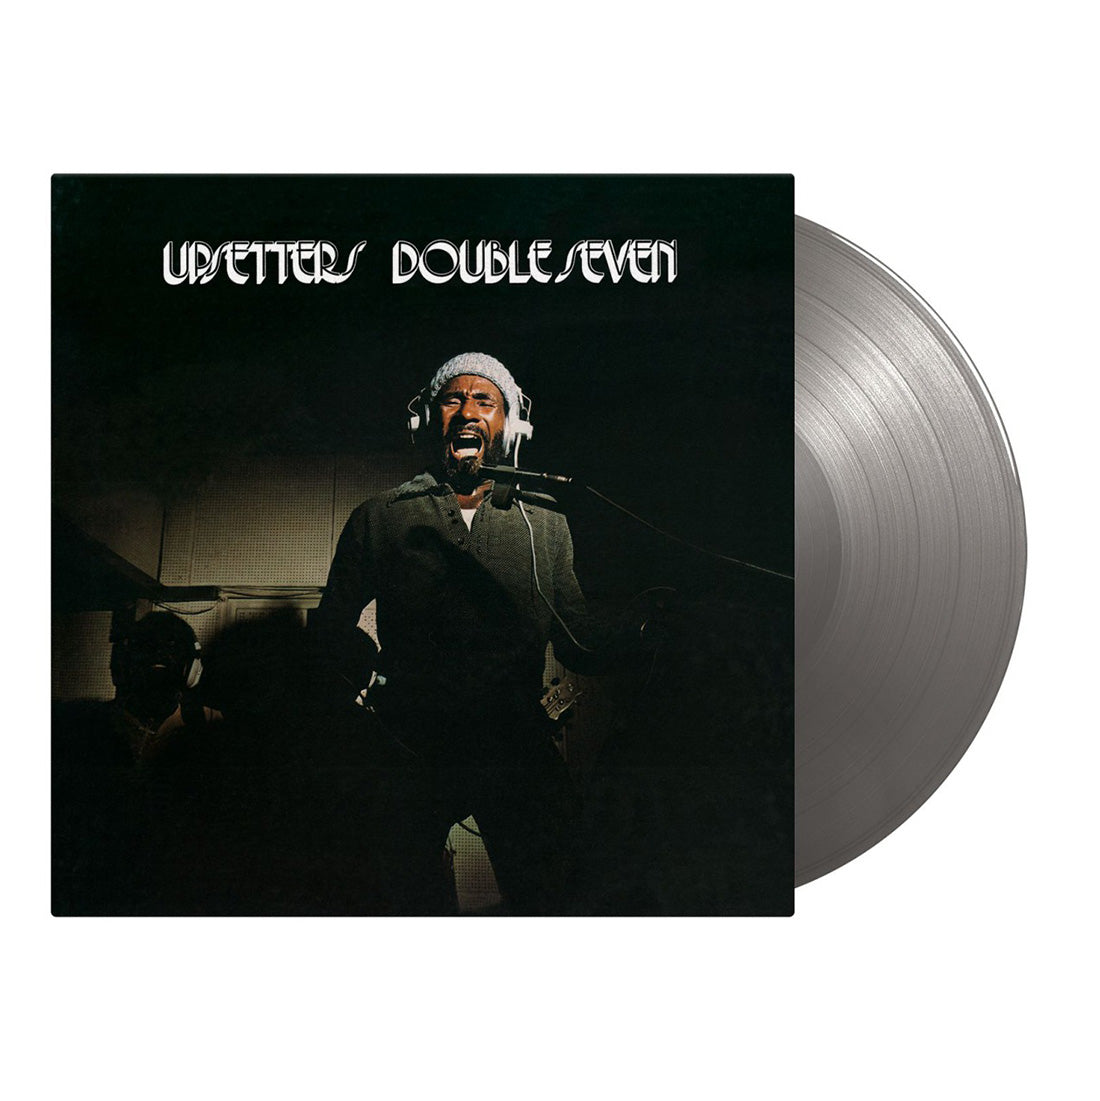 The Upsetters - Double Seven: Limited Silver Vinyl LP